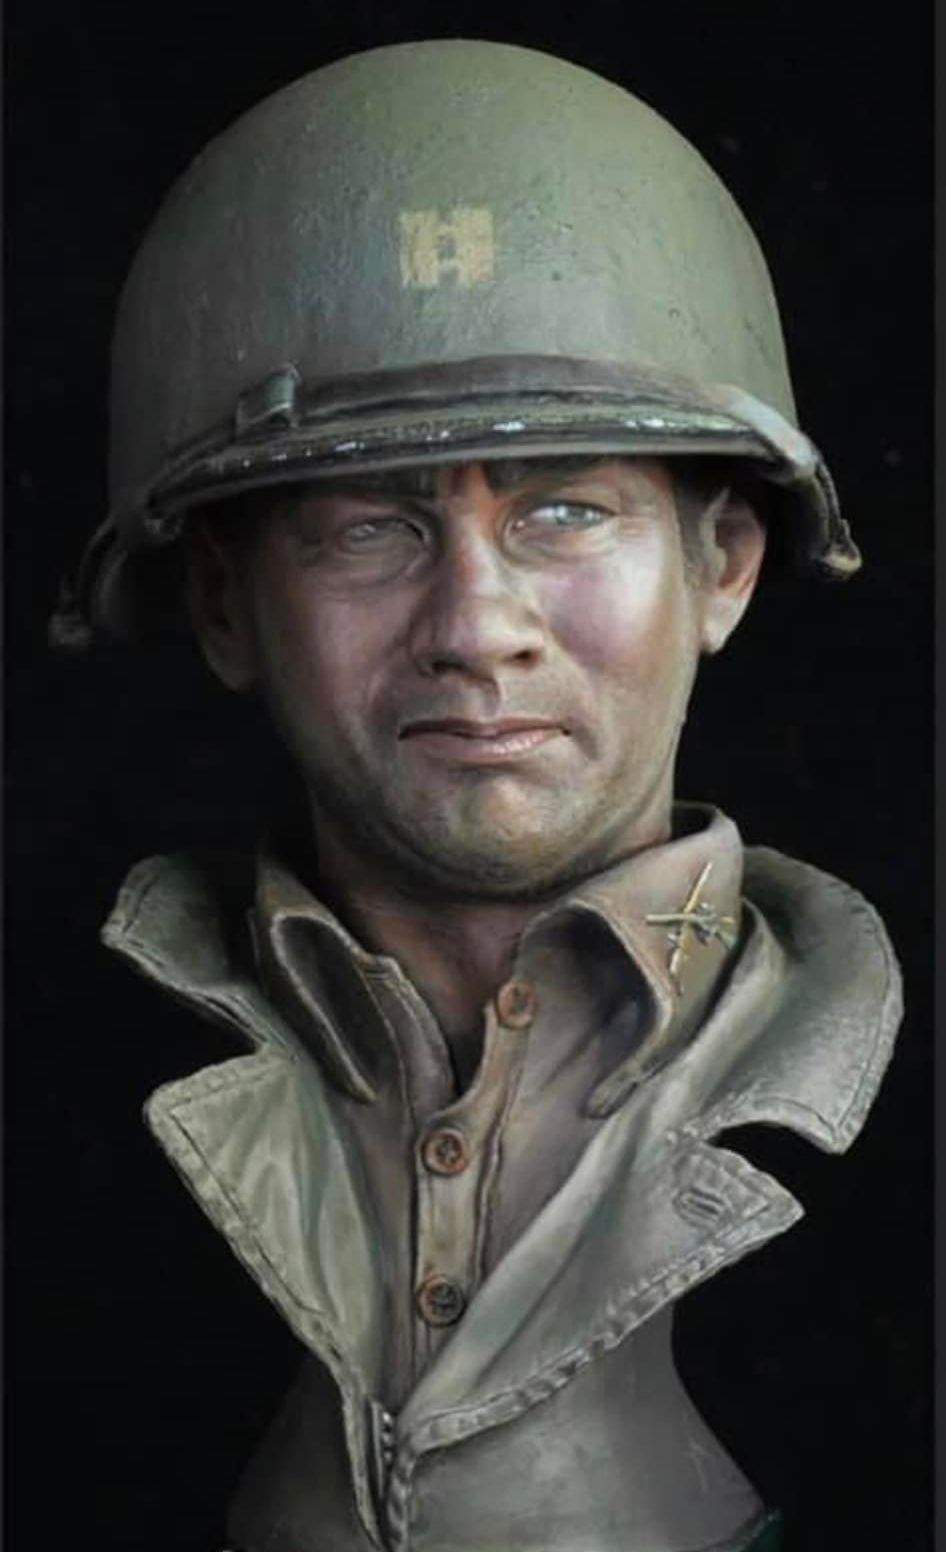 DTMMB001 - US OFFICER 2°RANGER NORMANDIA 1944 - Scale 1:6 -